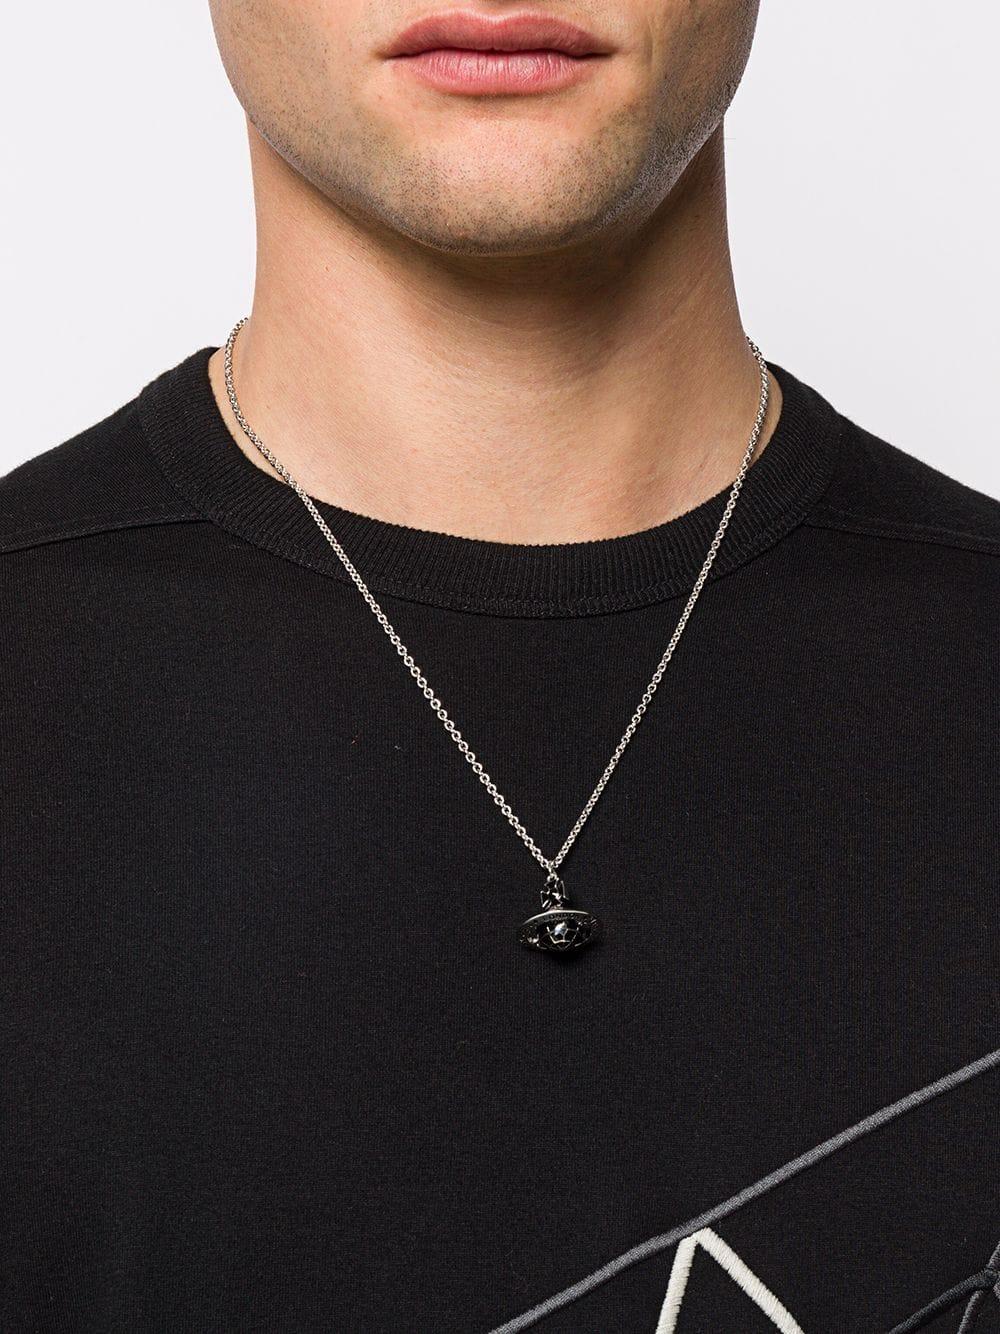 Vivienne Westwood Logo Pendant Necklace in Black for Men - Lyst